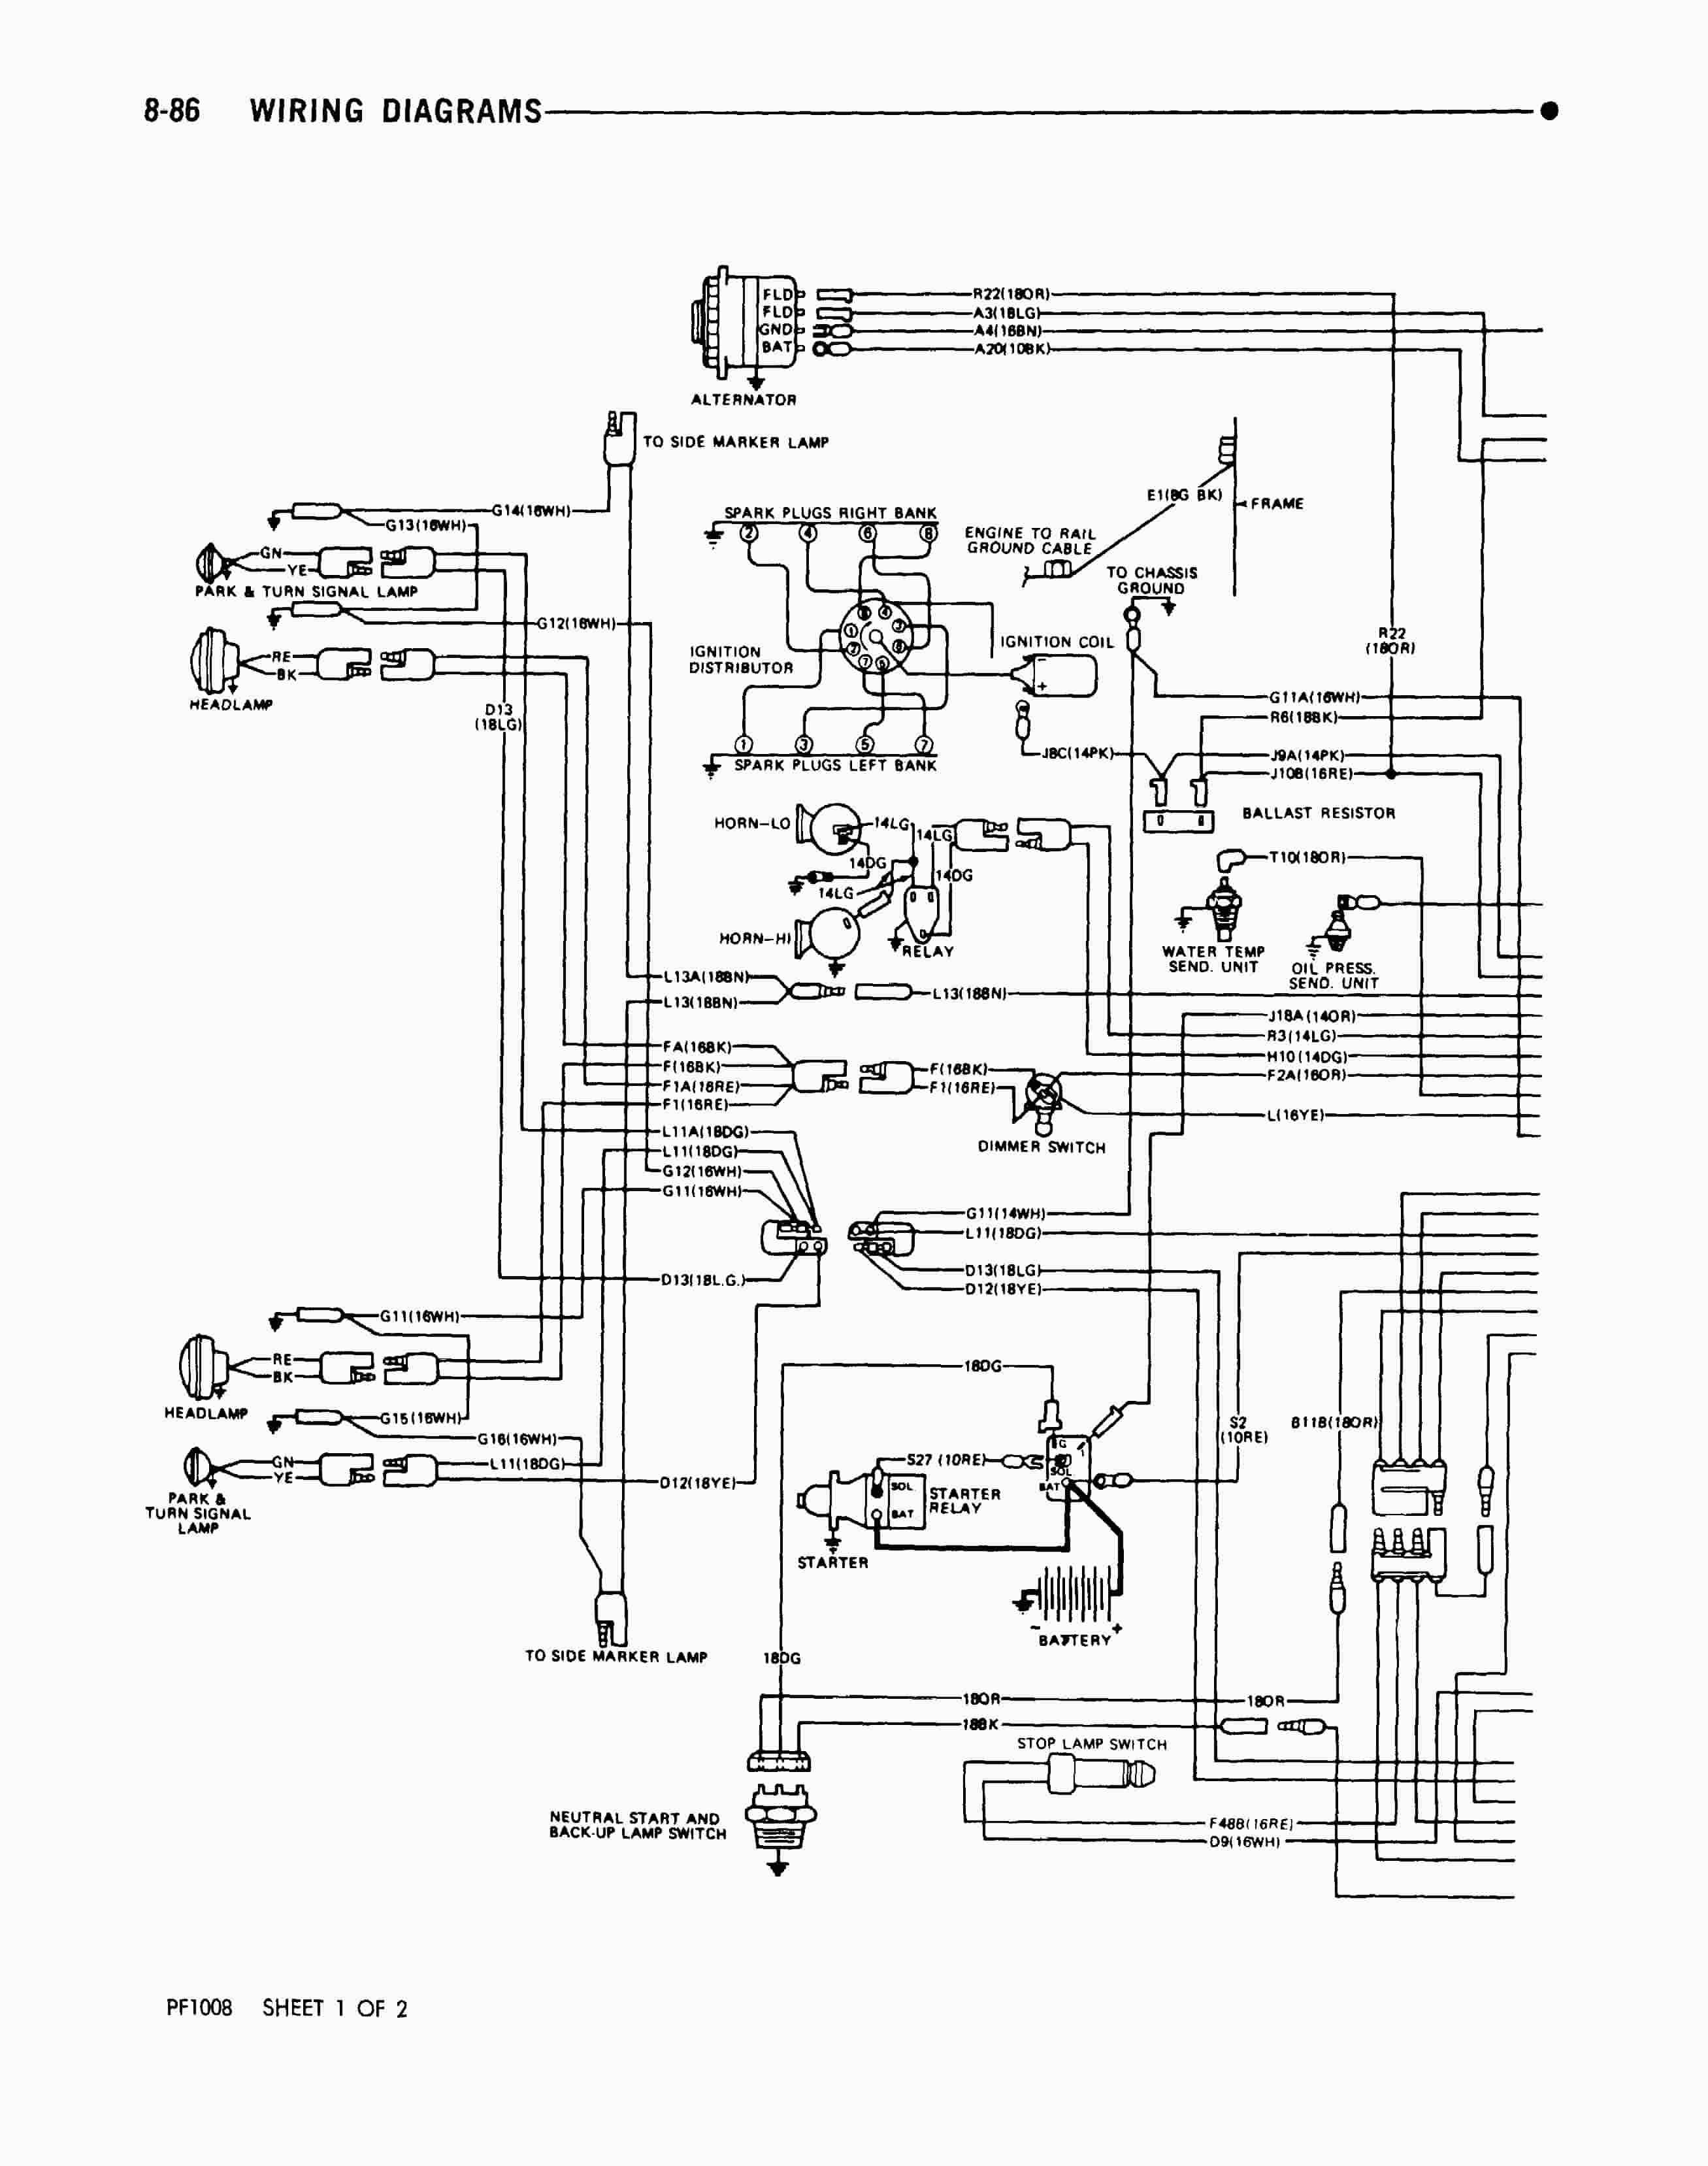 Winnebago Electrical Wiring Diagrams | Manual E-Books - Winnebago Wiring Diagram